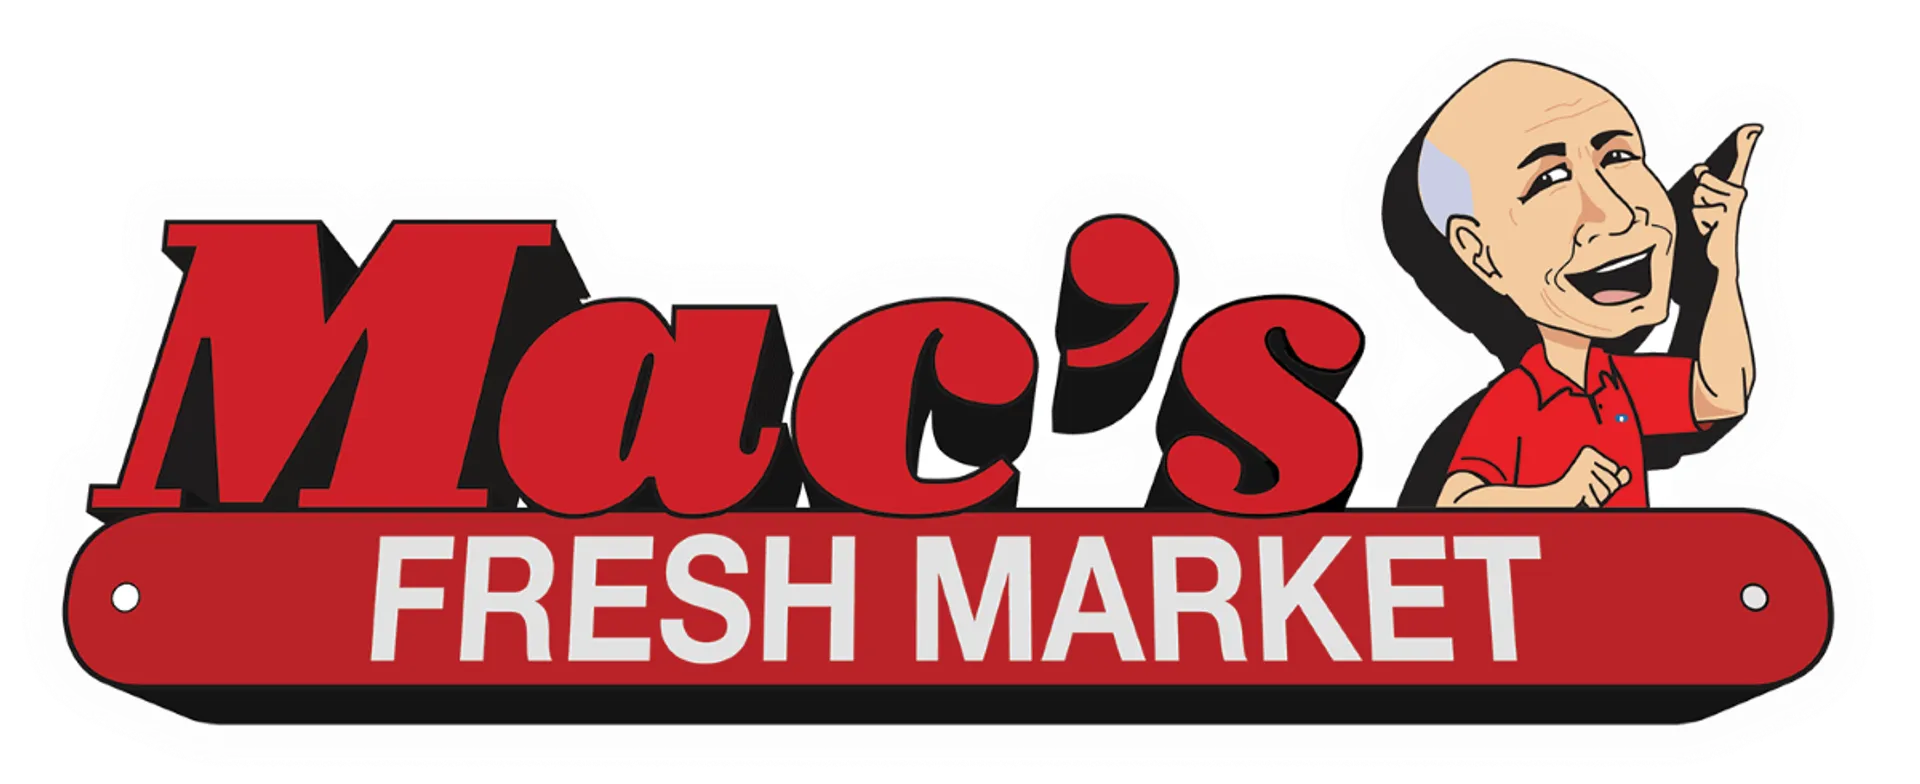 MAC'S FRESHMARKET logo current weekly ad